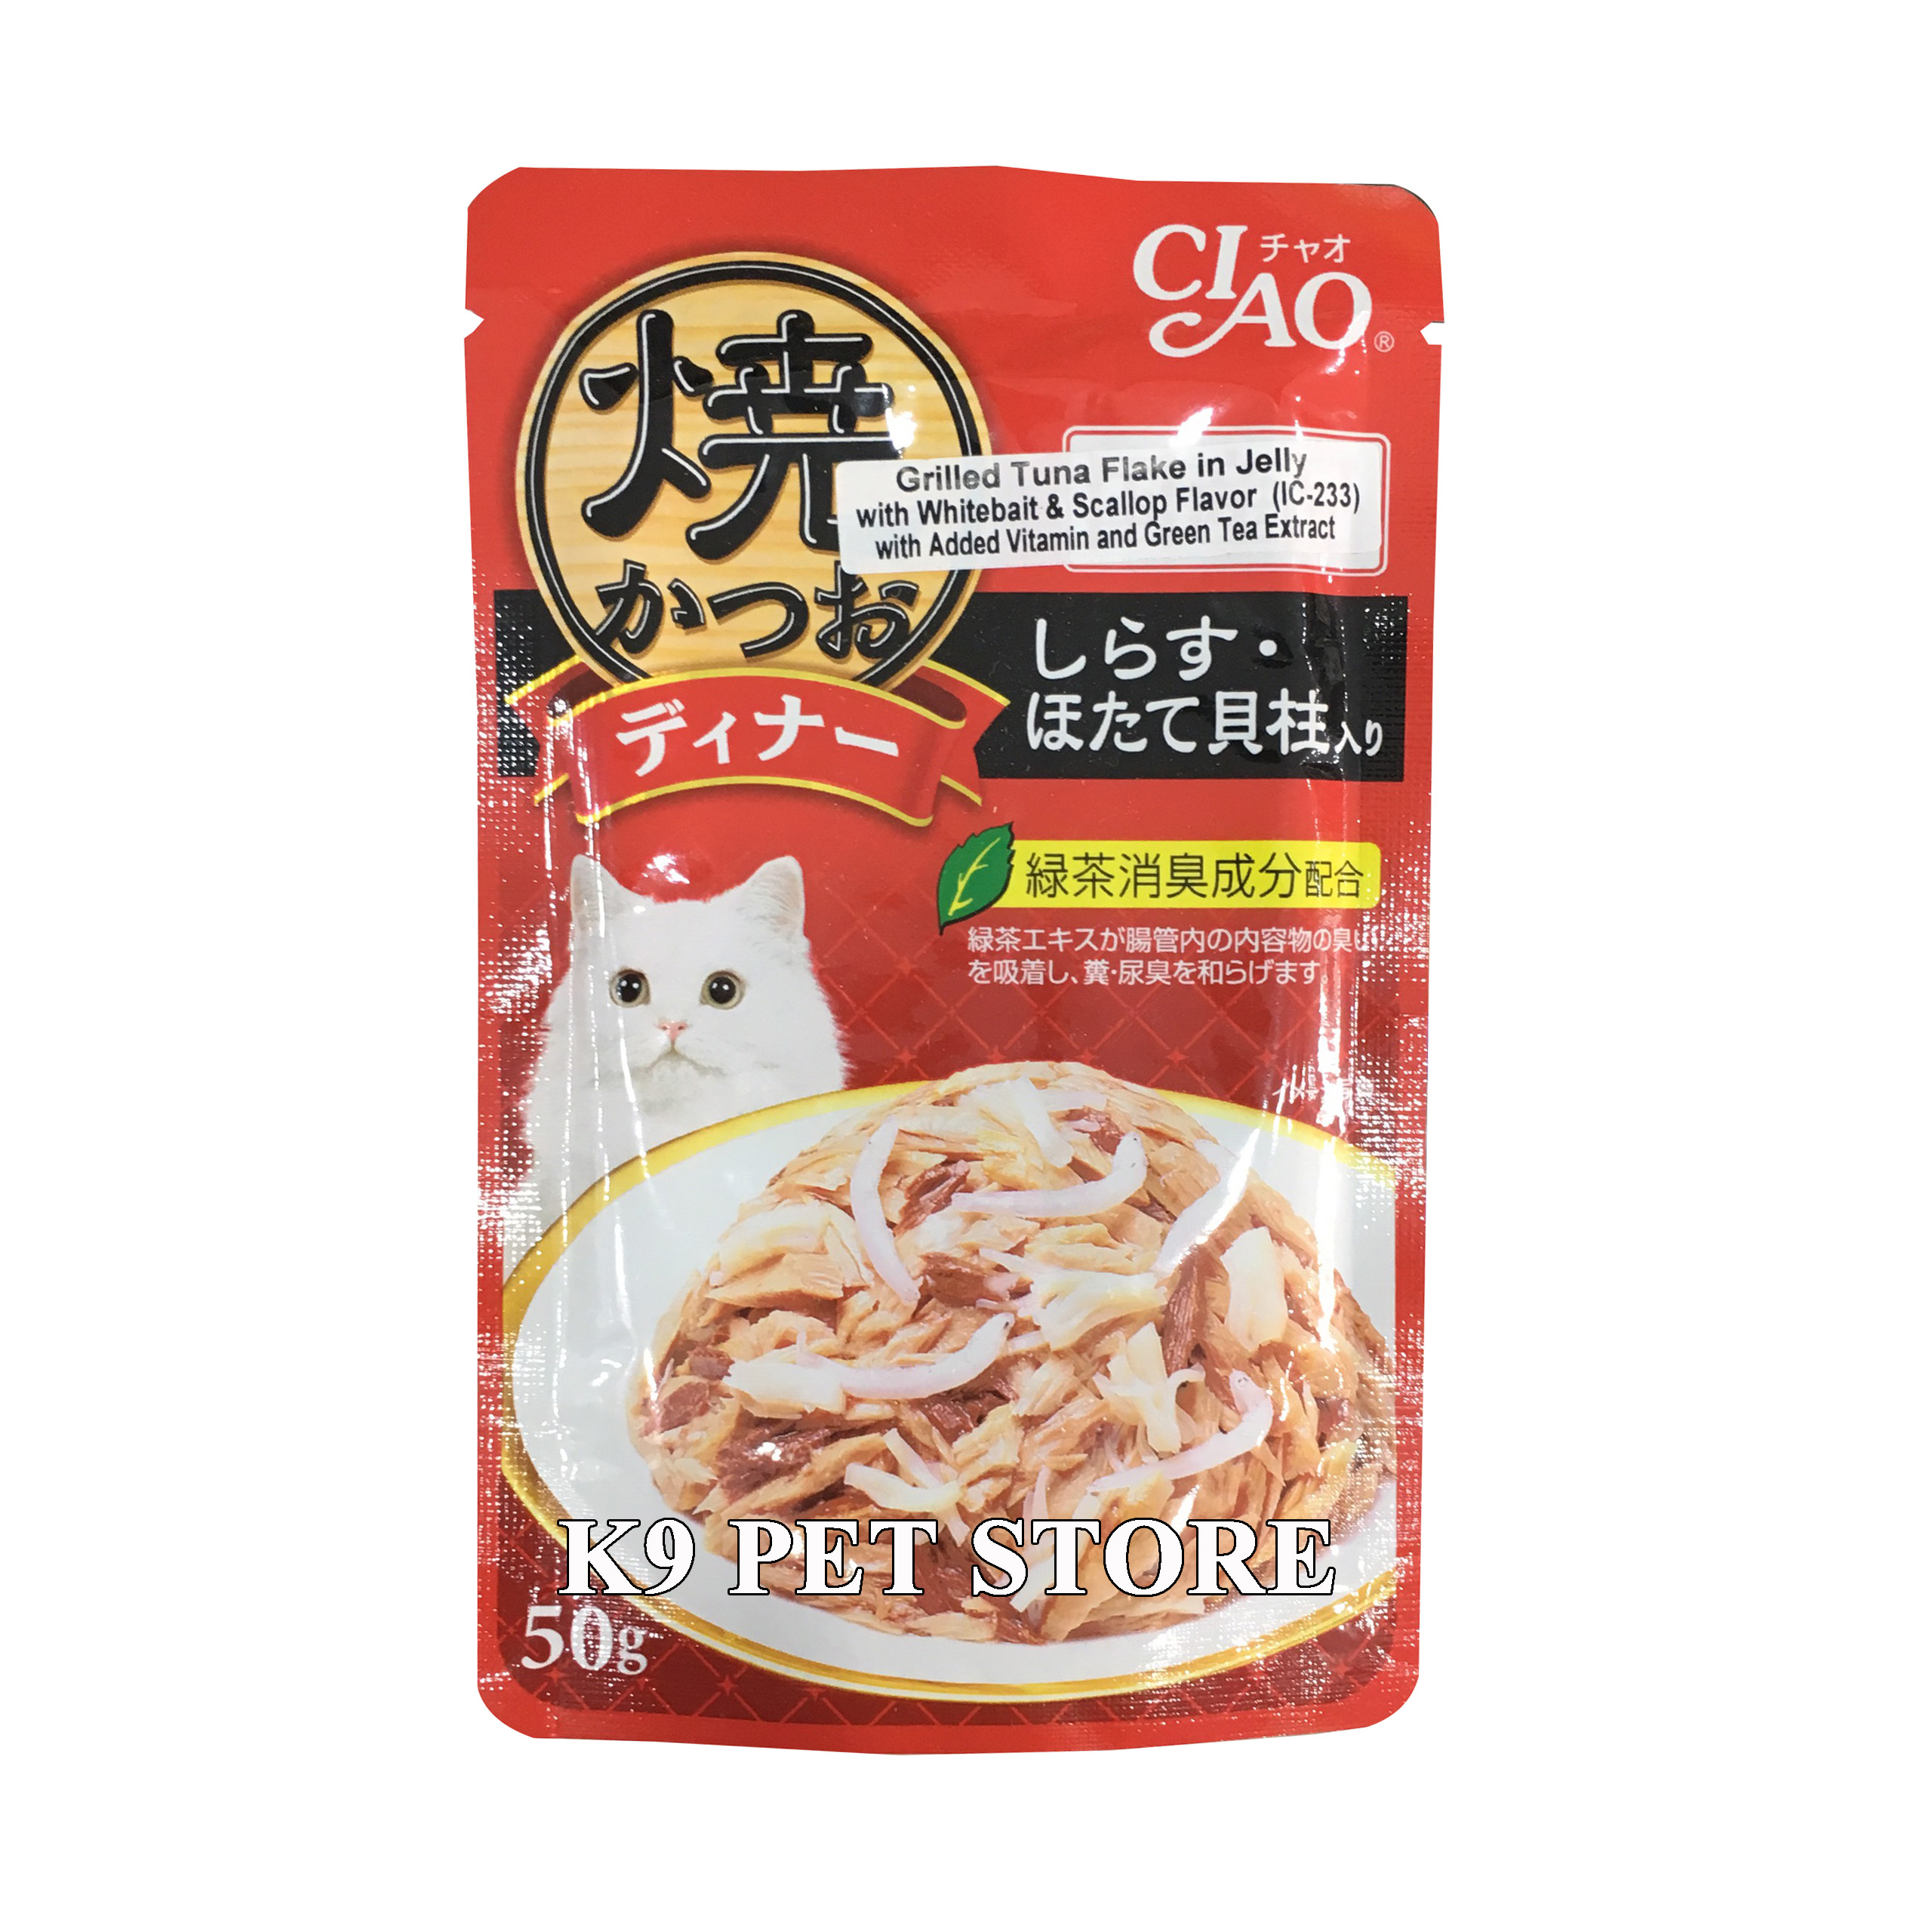 [IC-233] Pate Ciao cho mèo vị Grilled Tuna Flake in Jelly with Whitebait & Scallop 50g